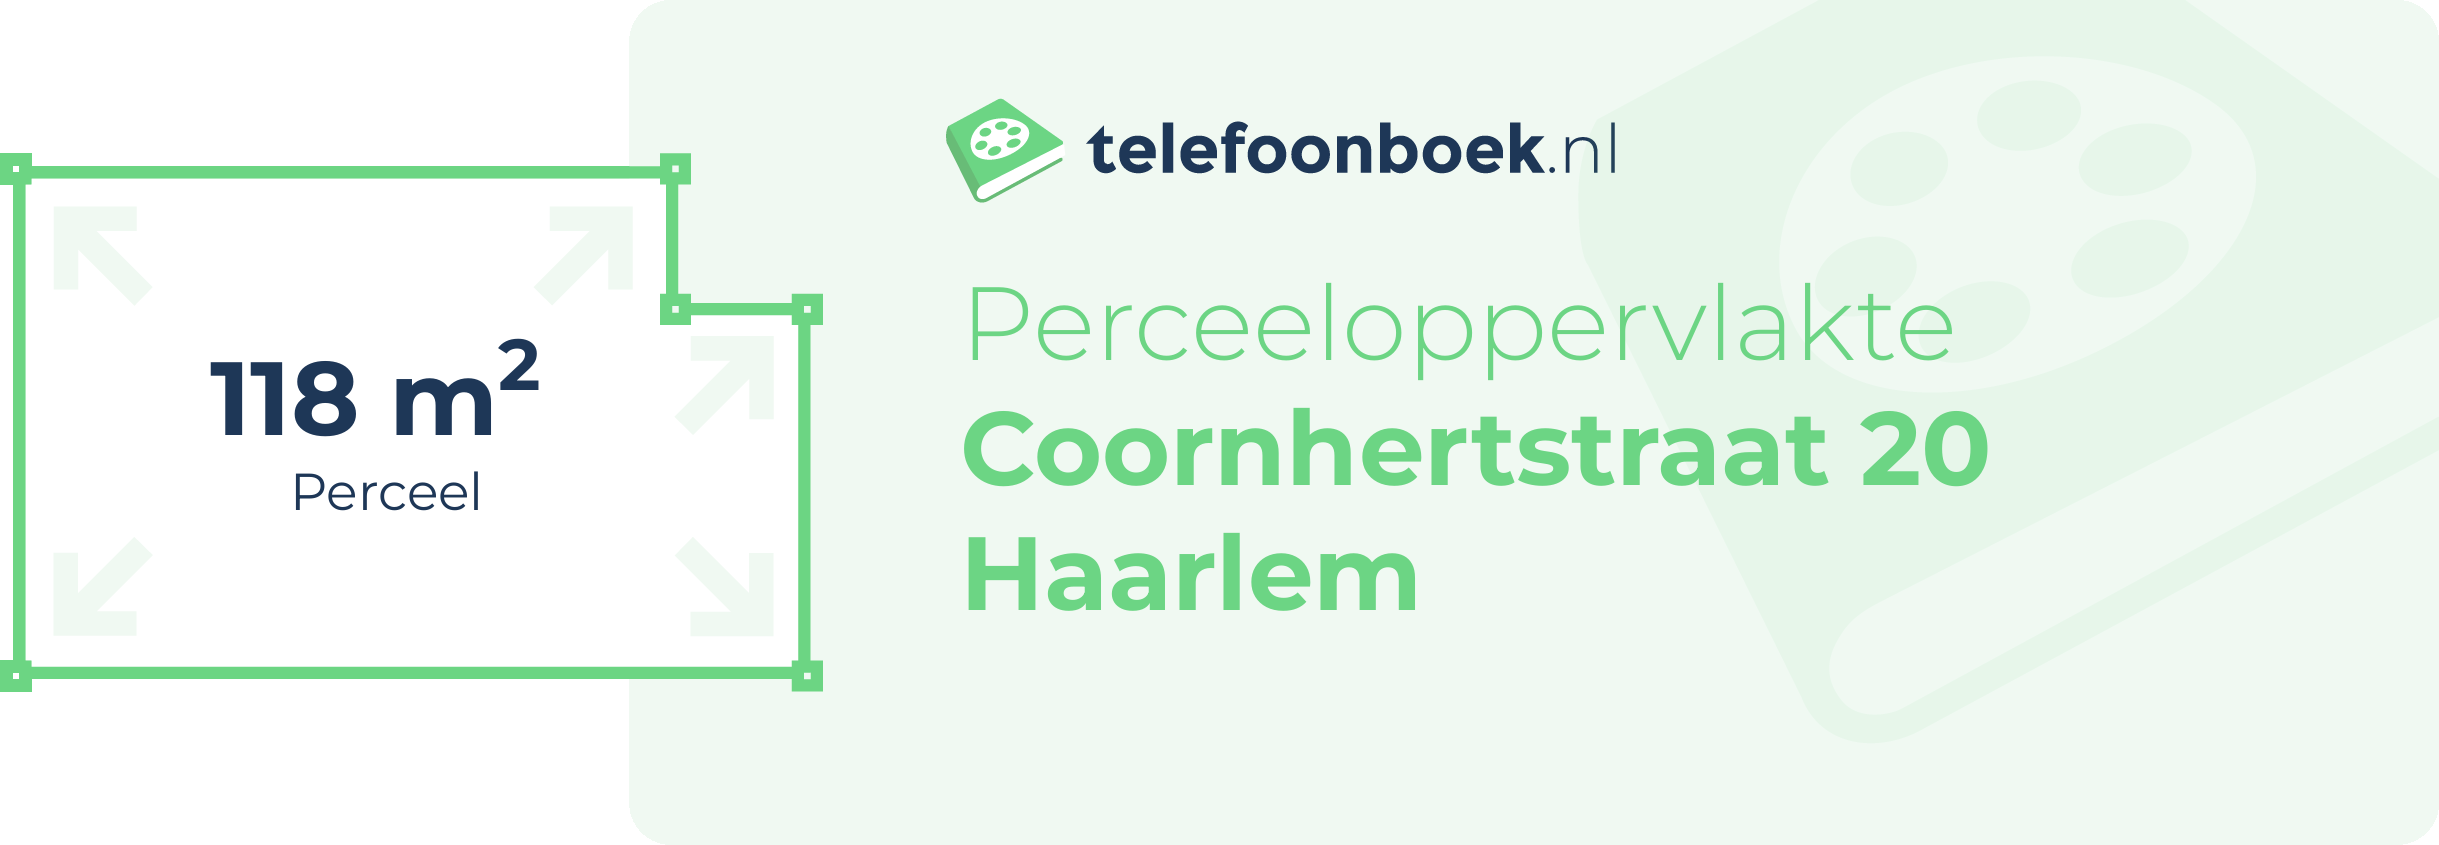 Perceeloppervlakte Coornhertstraat 20 Haarlem